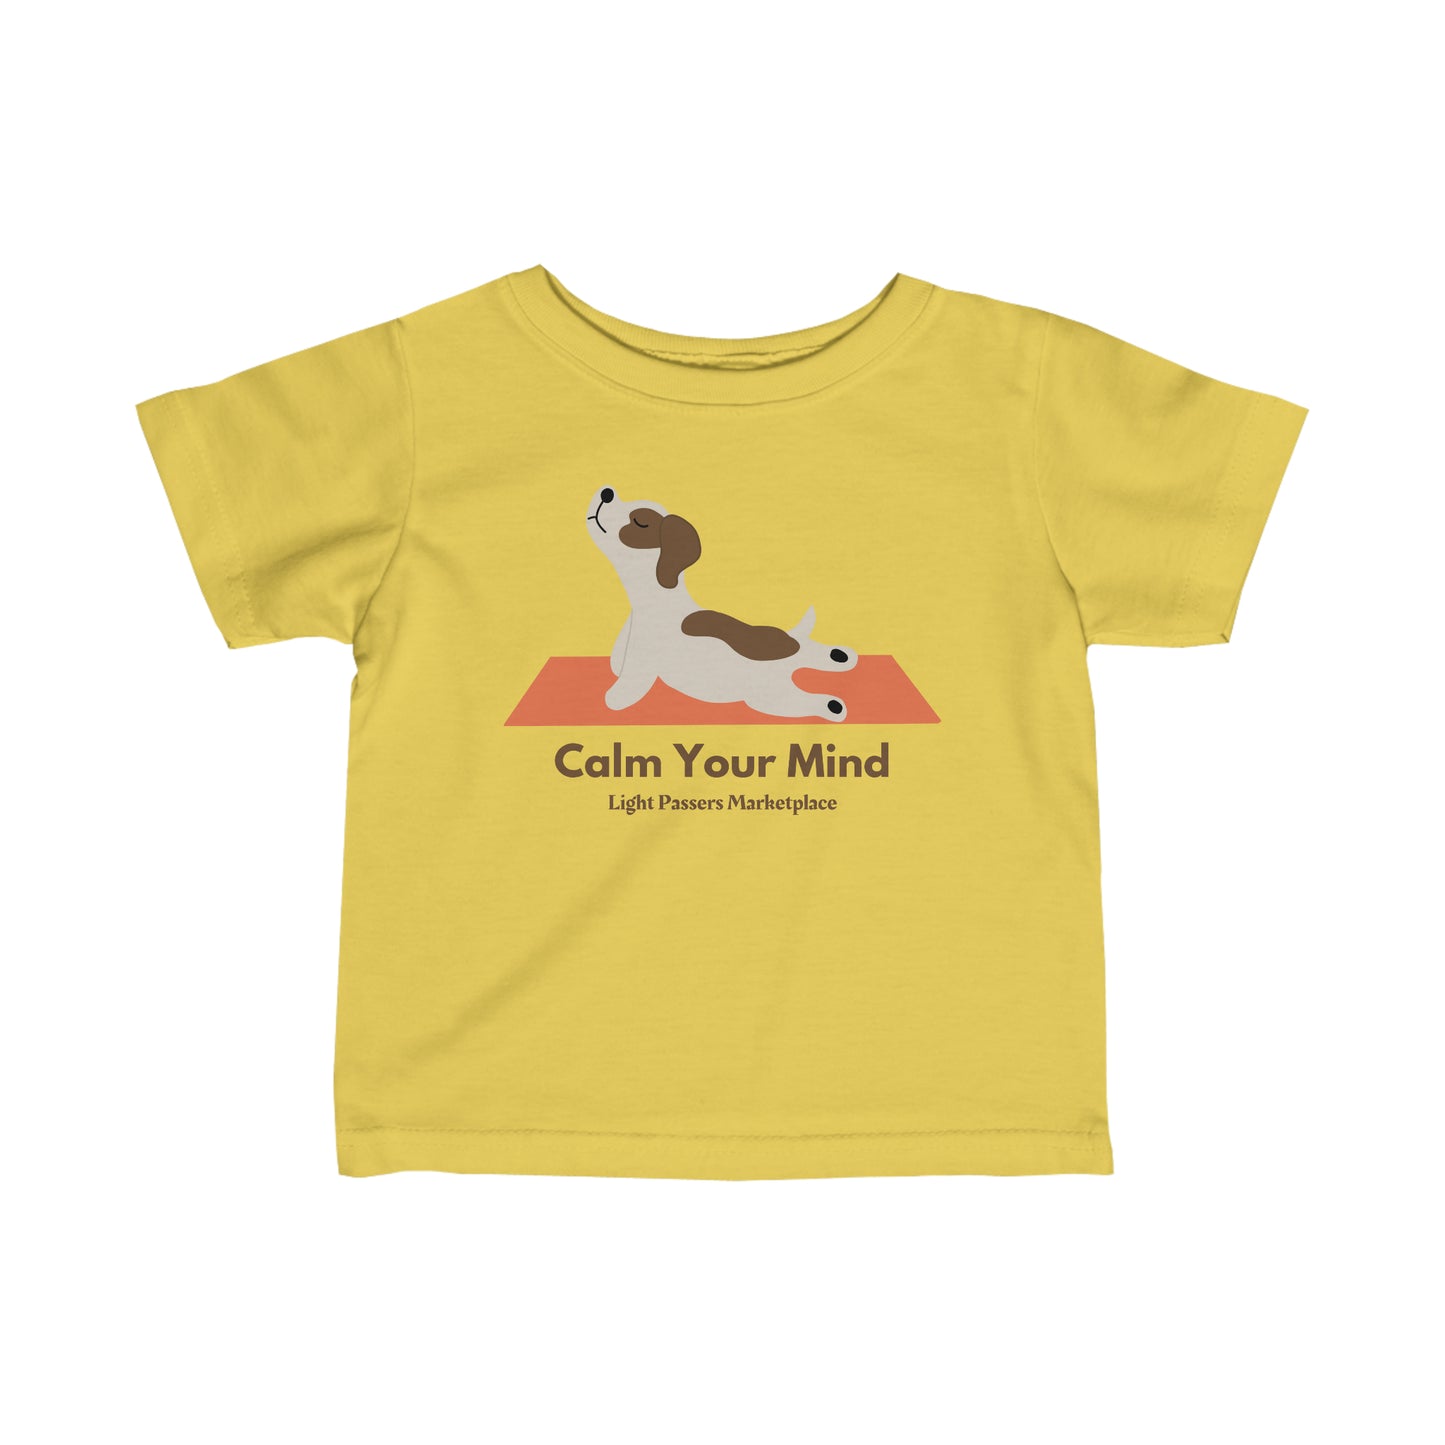 Light Passers Marketplace Yoga Calm Dog Baby T-shirt Fitness, Mental Health